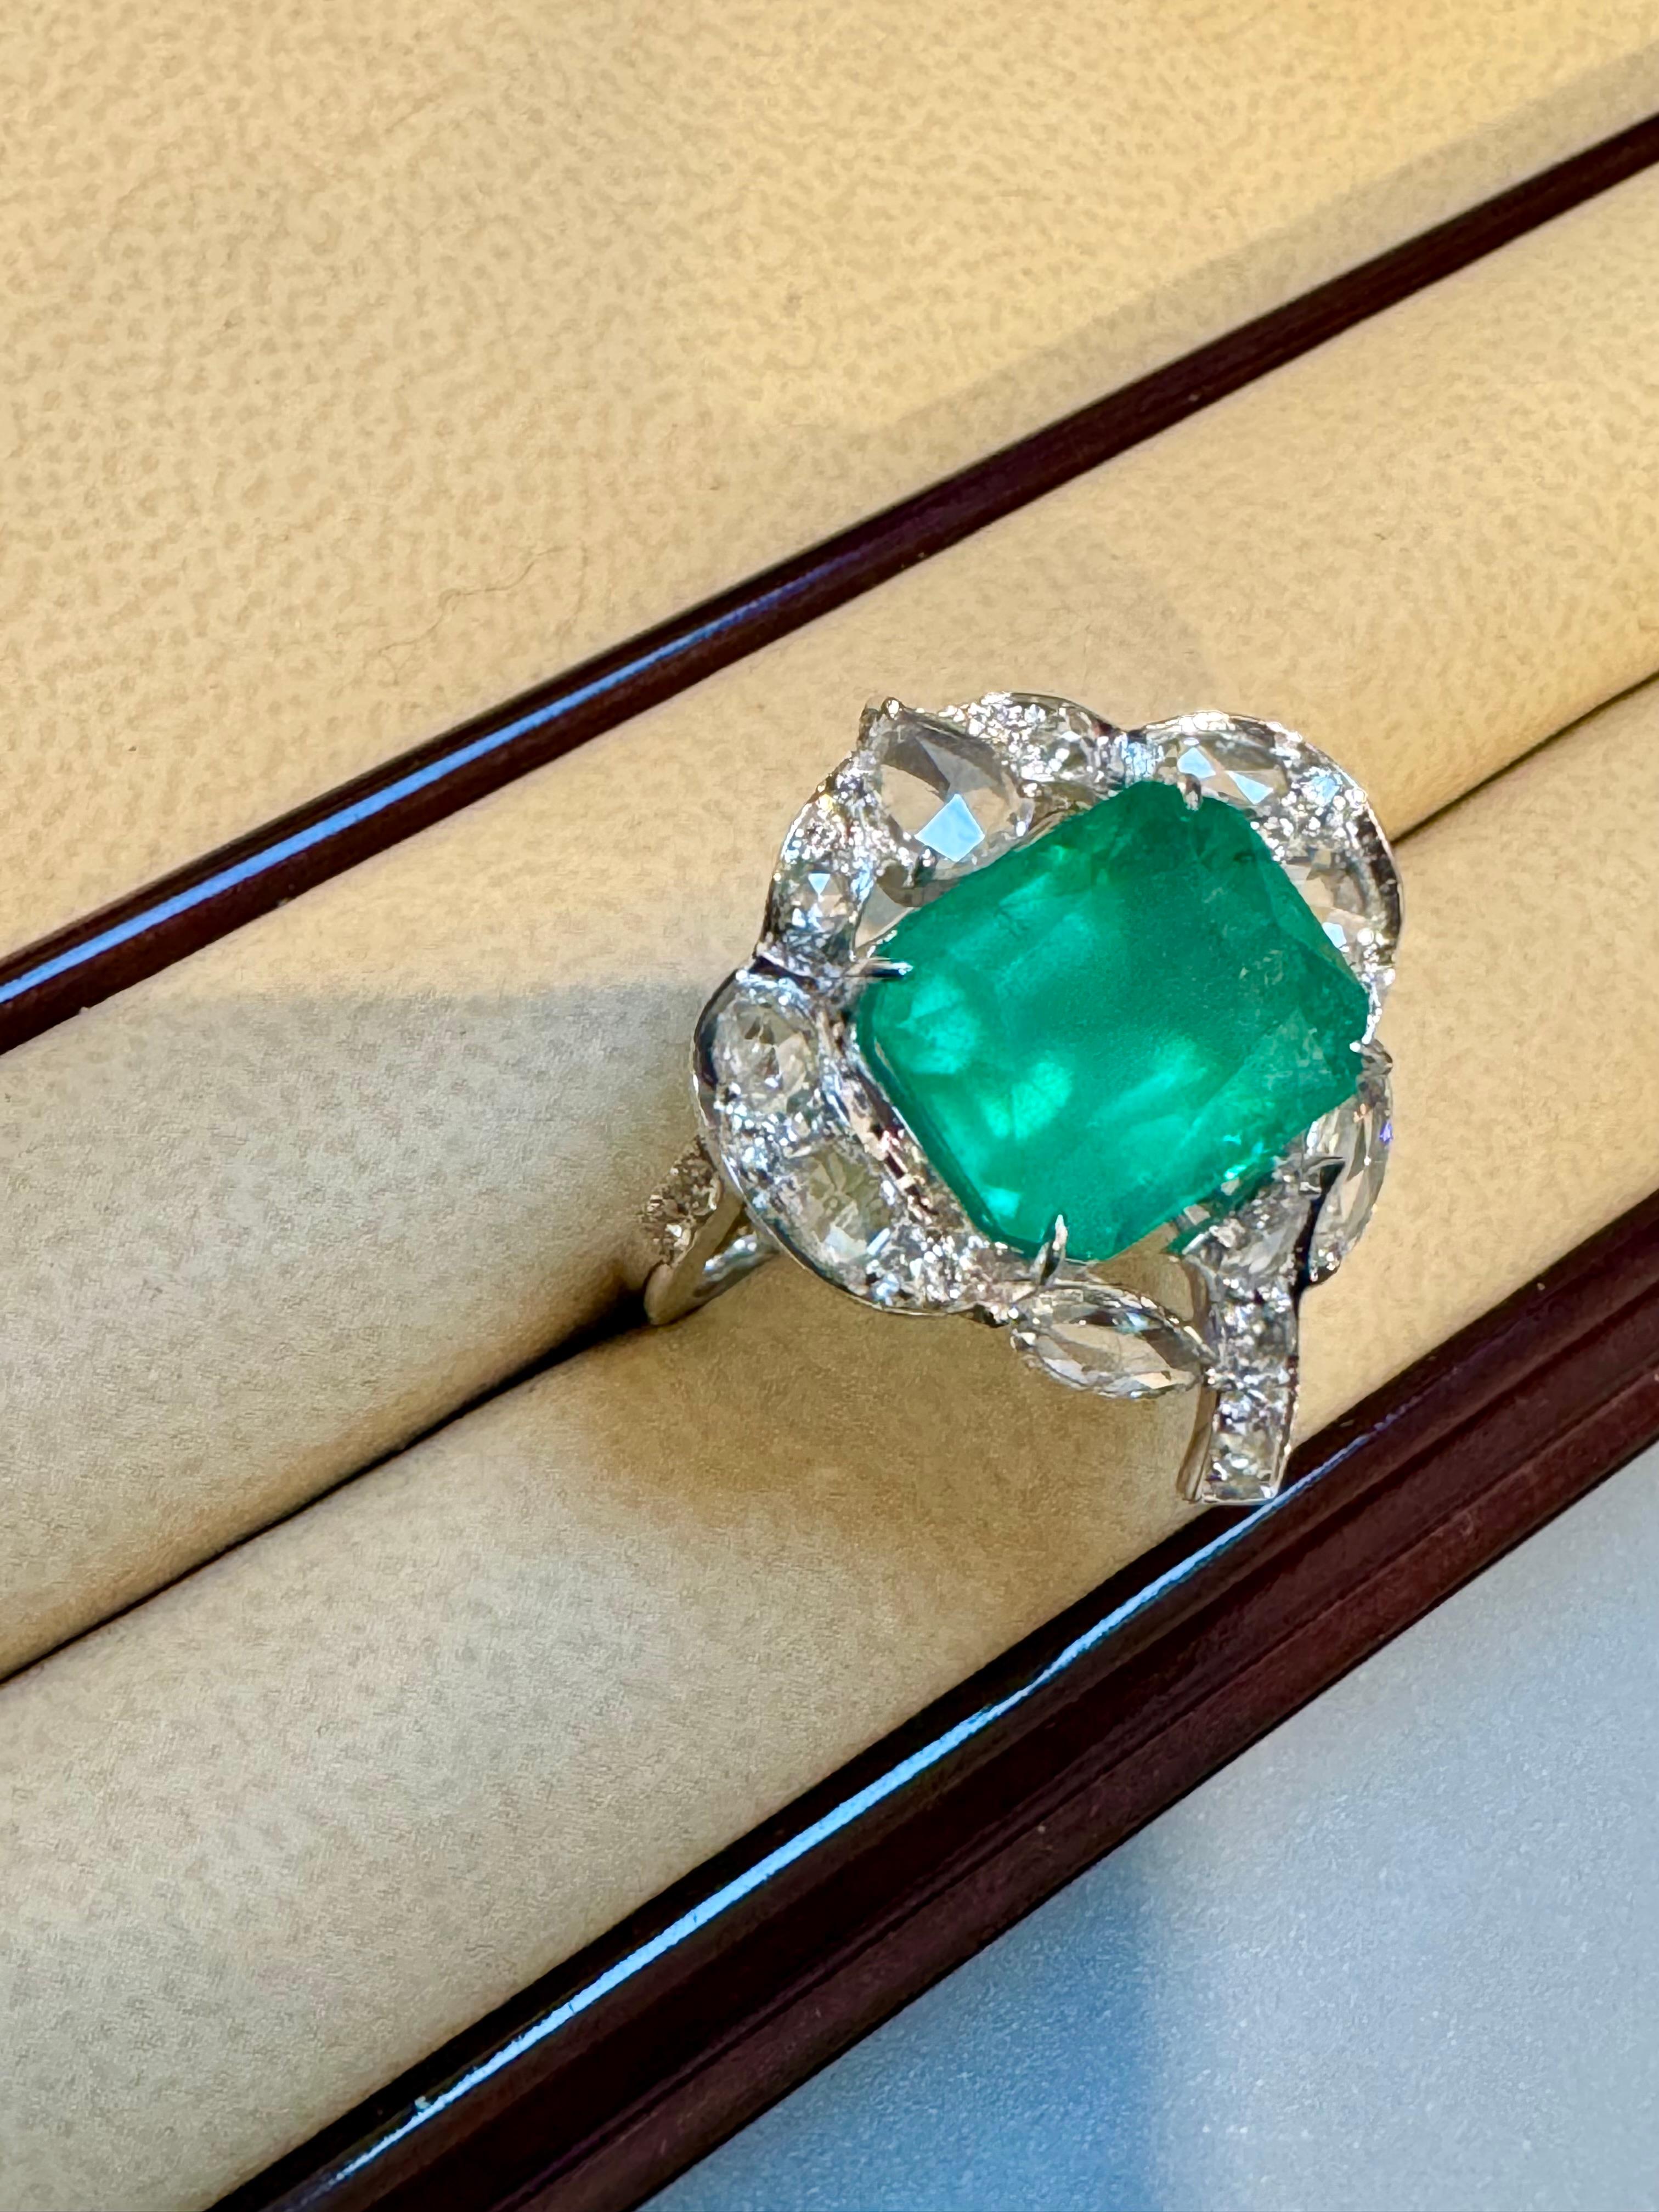 7 Ct Finest Zambian Emerald Cut Emerald & 1.5Ct Diamond Ring, 18 Kt Gold Size 9 For Sale 2